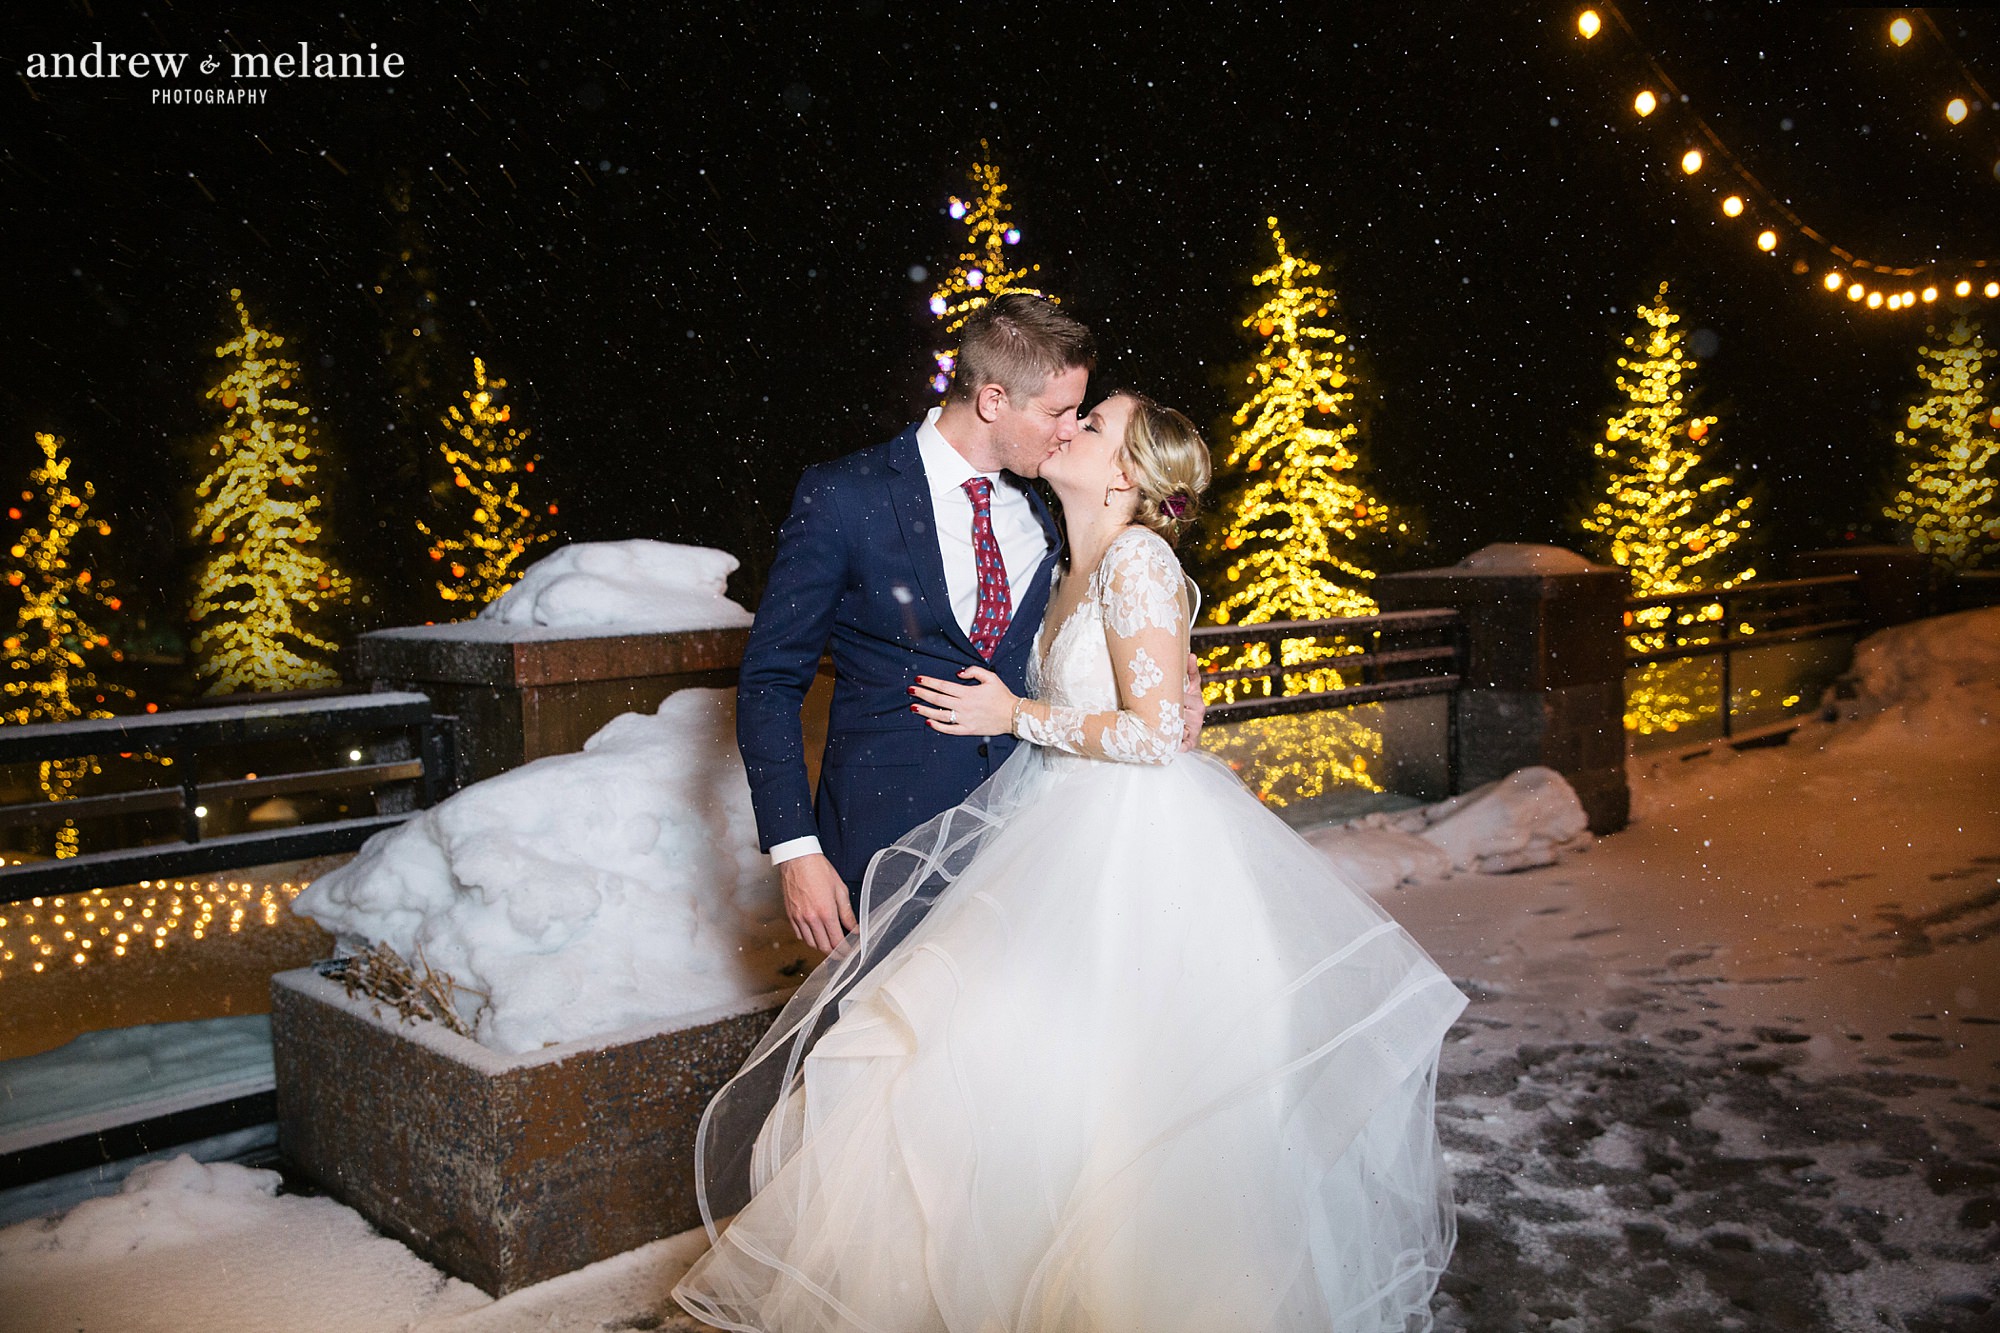 winter wedding in Lake Tahoe squaw valley resort. Bride and groom in snow